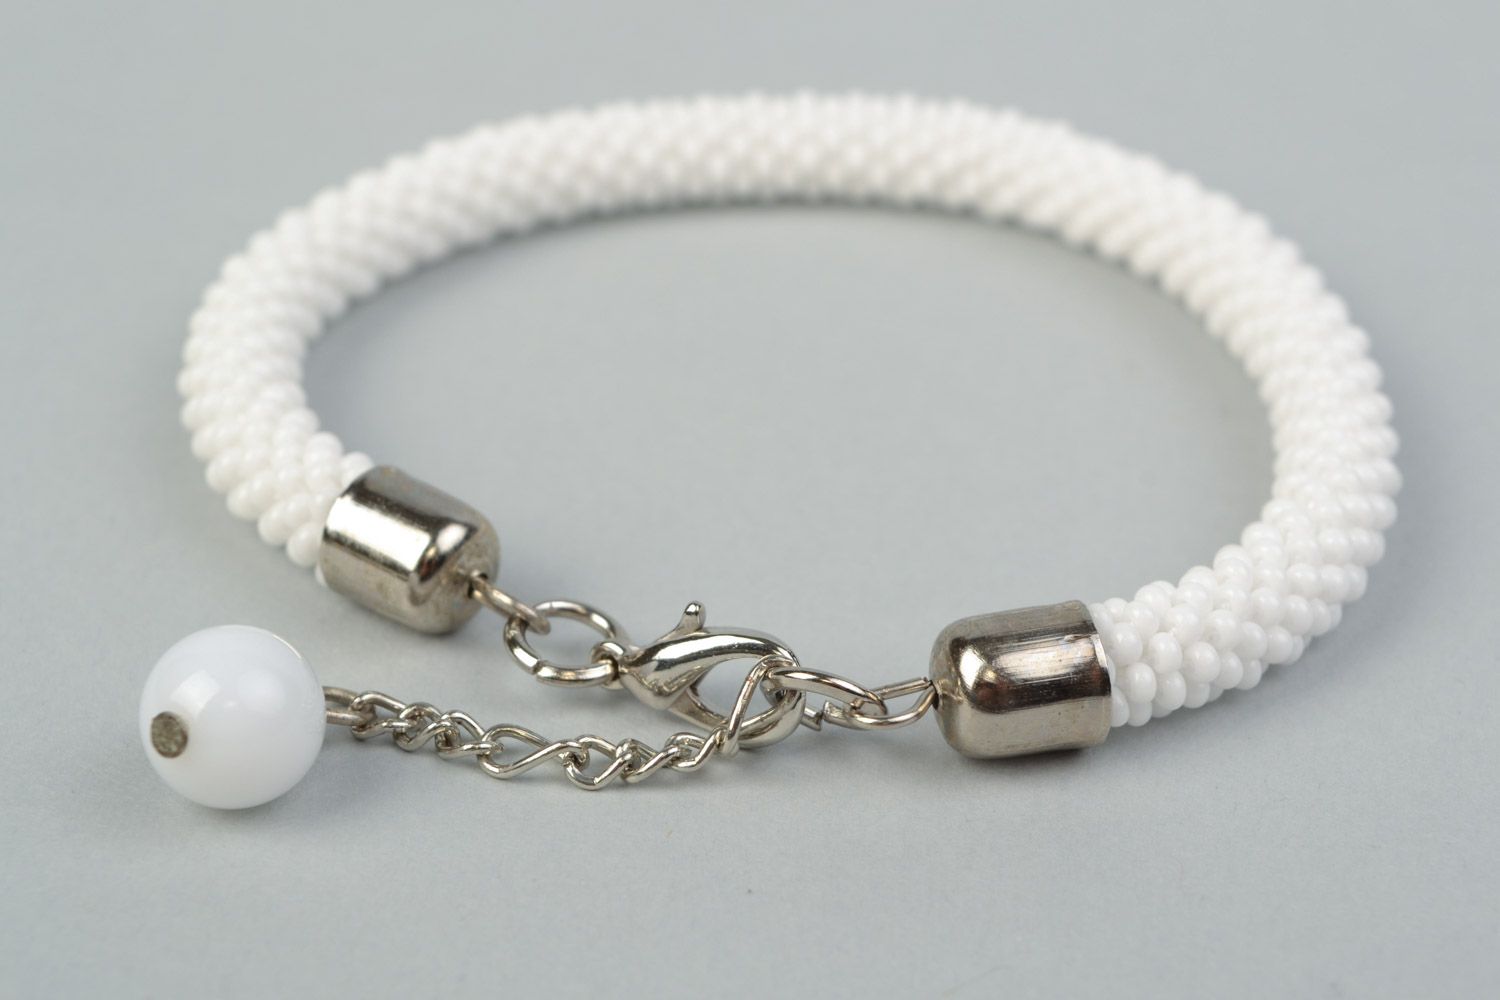 Handmade festive wrist cord bracelet crocheted of Czech beads in white color photo 4